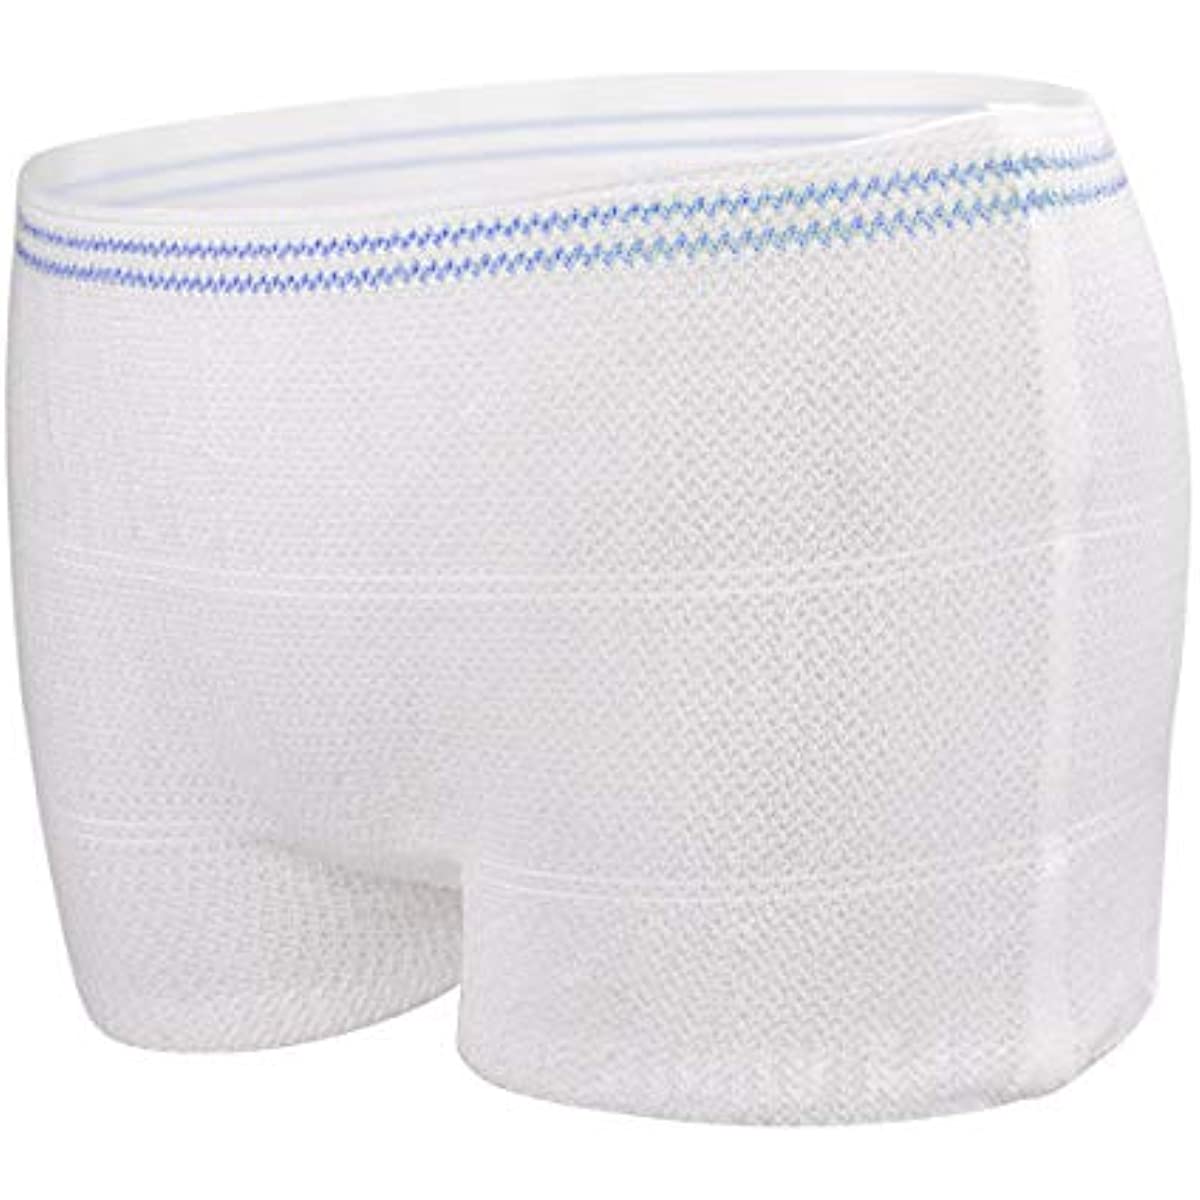 Healthy Studio Mesh Underwear Postpartum 5 Count Disposable Hospital Underwear  Mesh Panties for C-Section Underwear White 